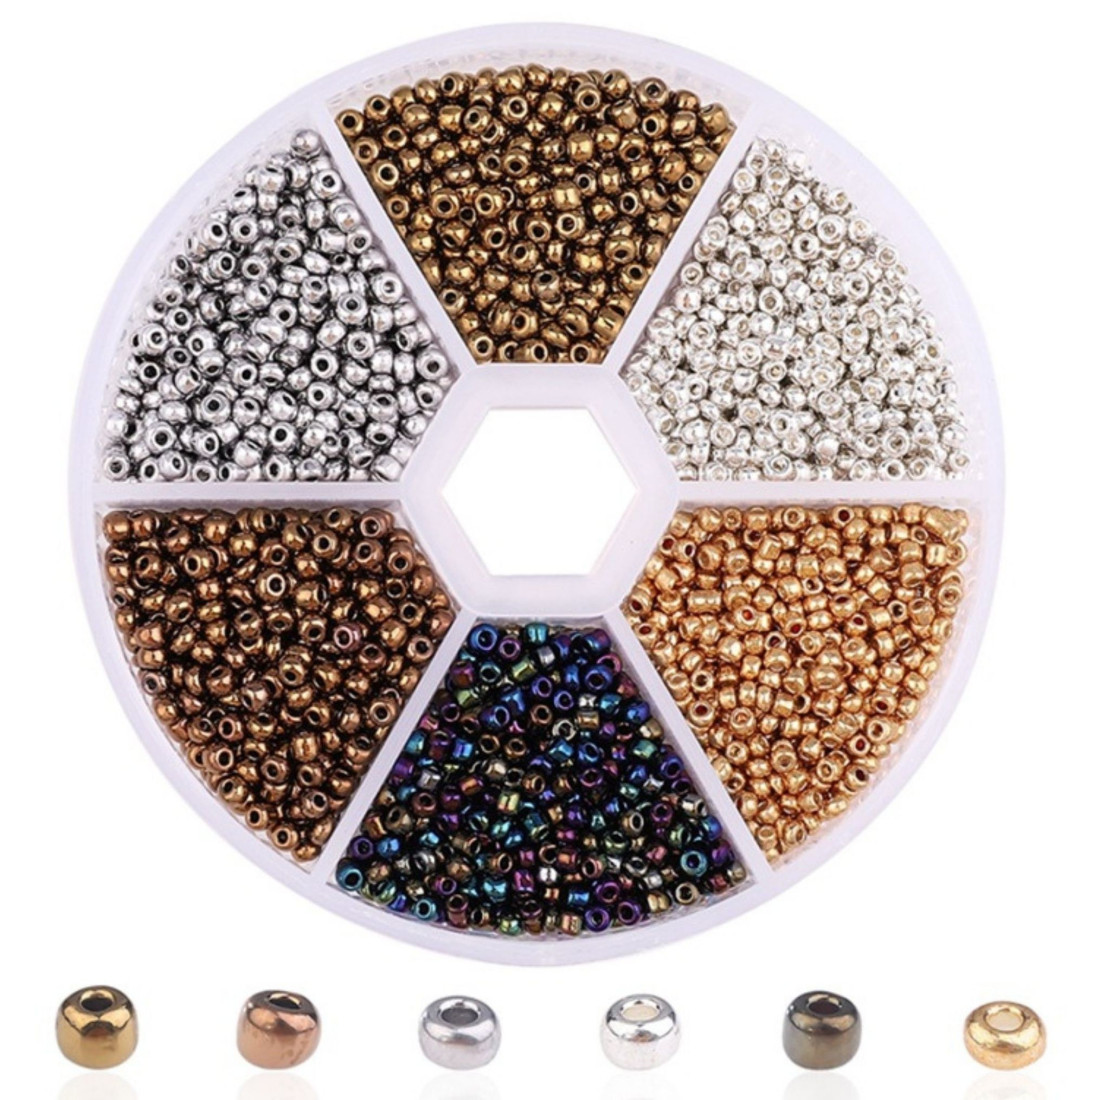 Boite box de perles de rocailles or argent marron 2mm 60gr env 2100 perles